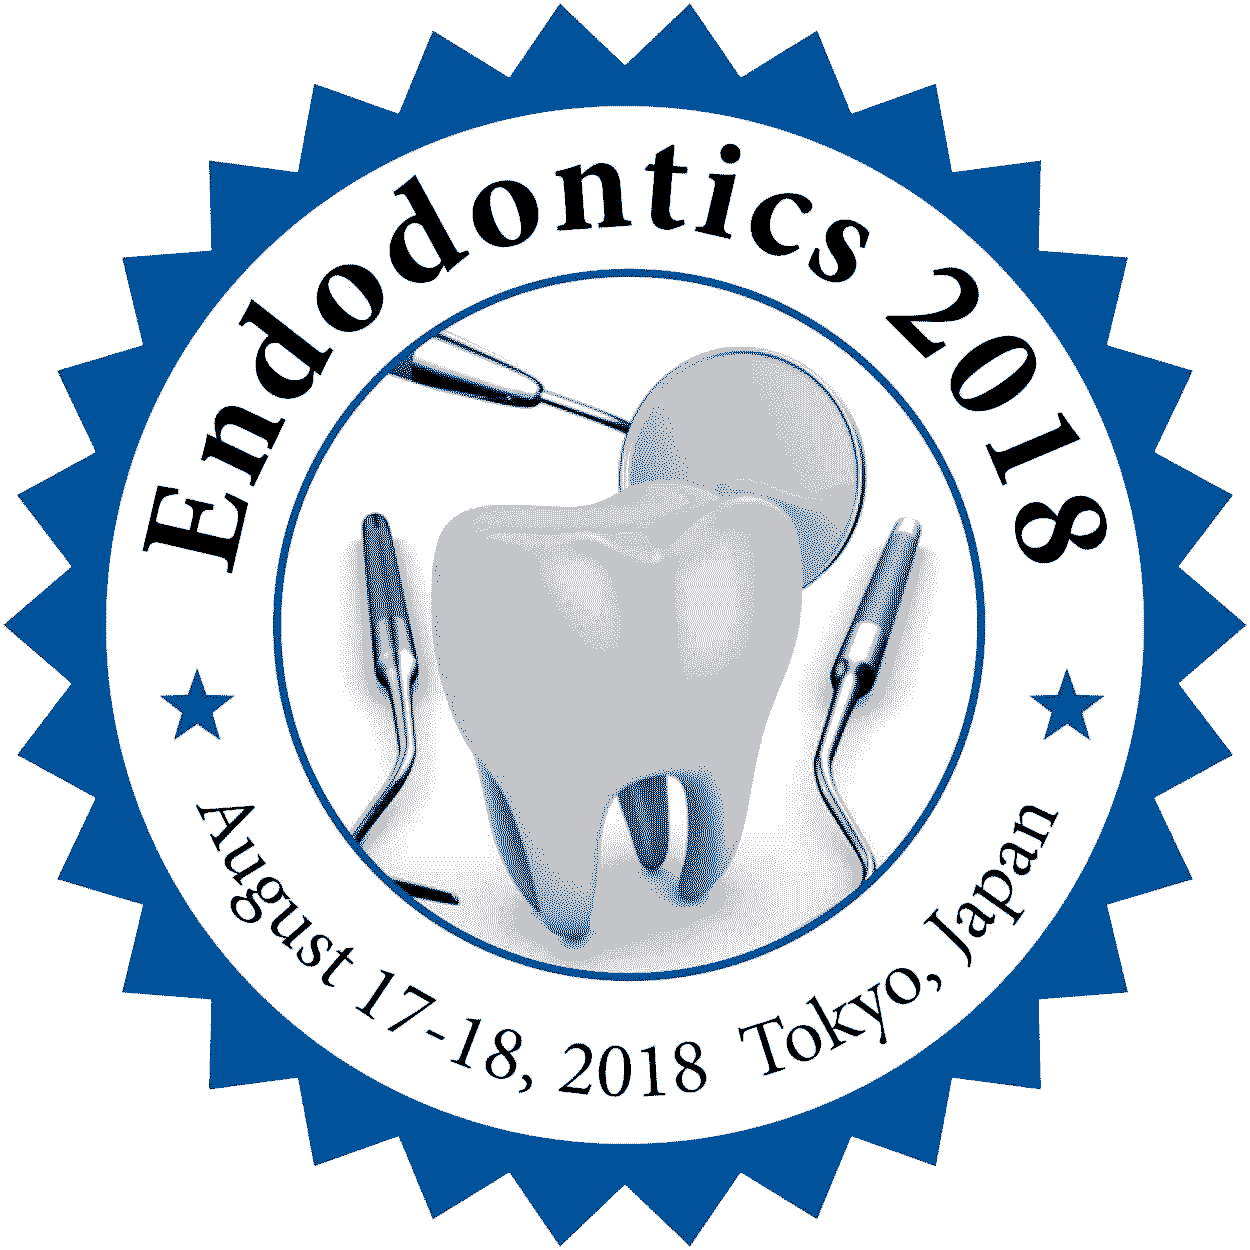 Discussion clipart plenary. Annual congress on endodontics